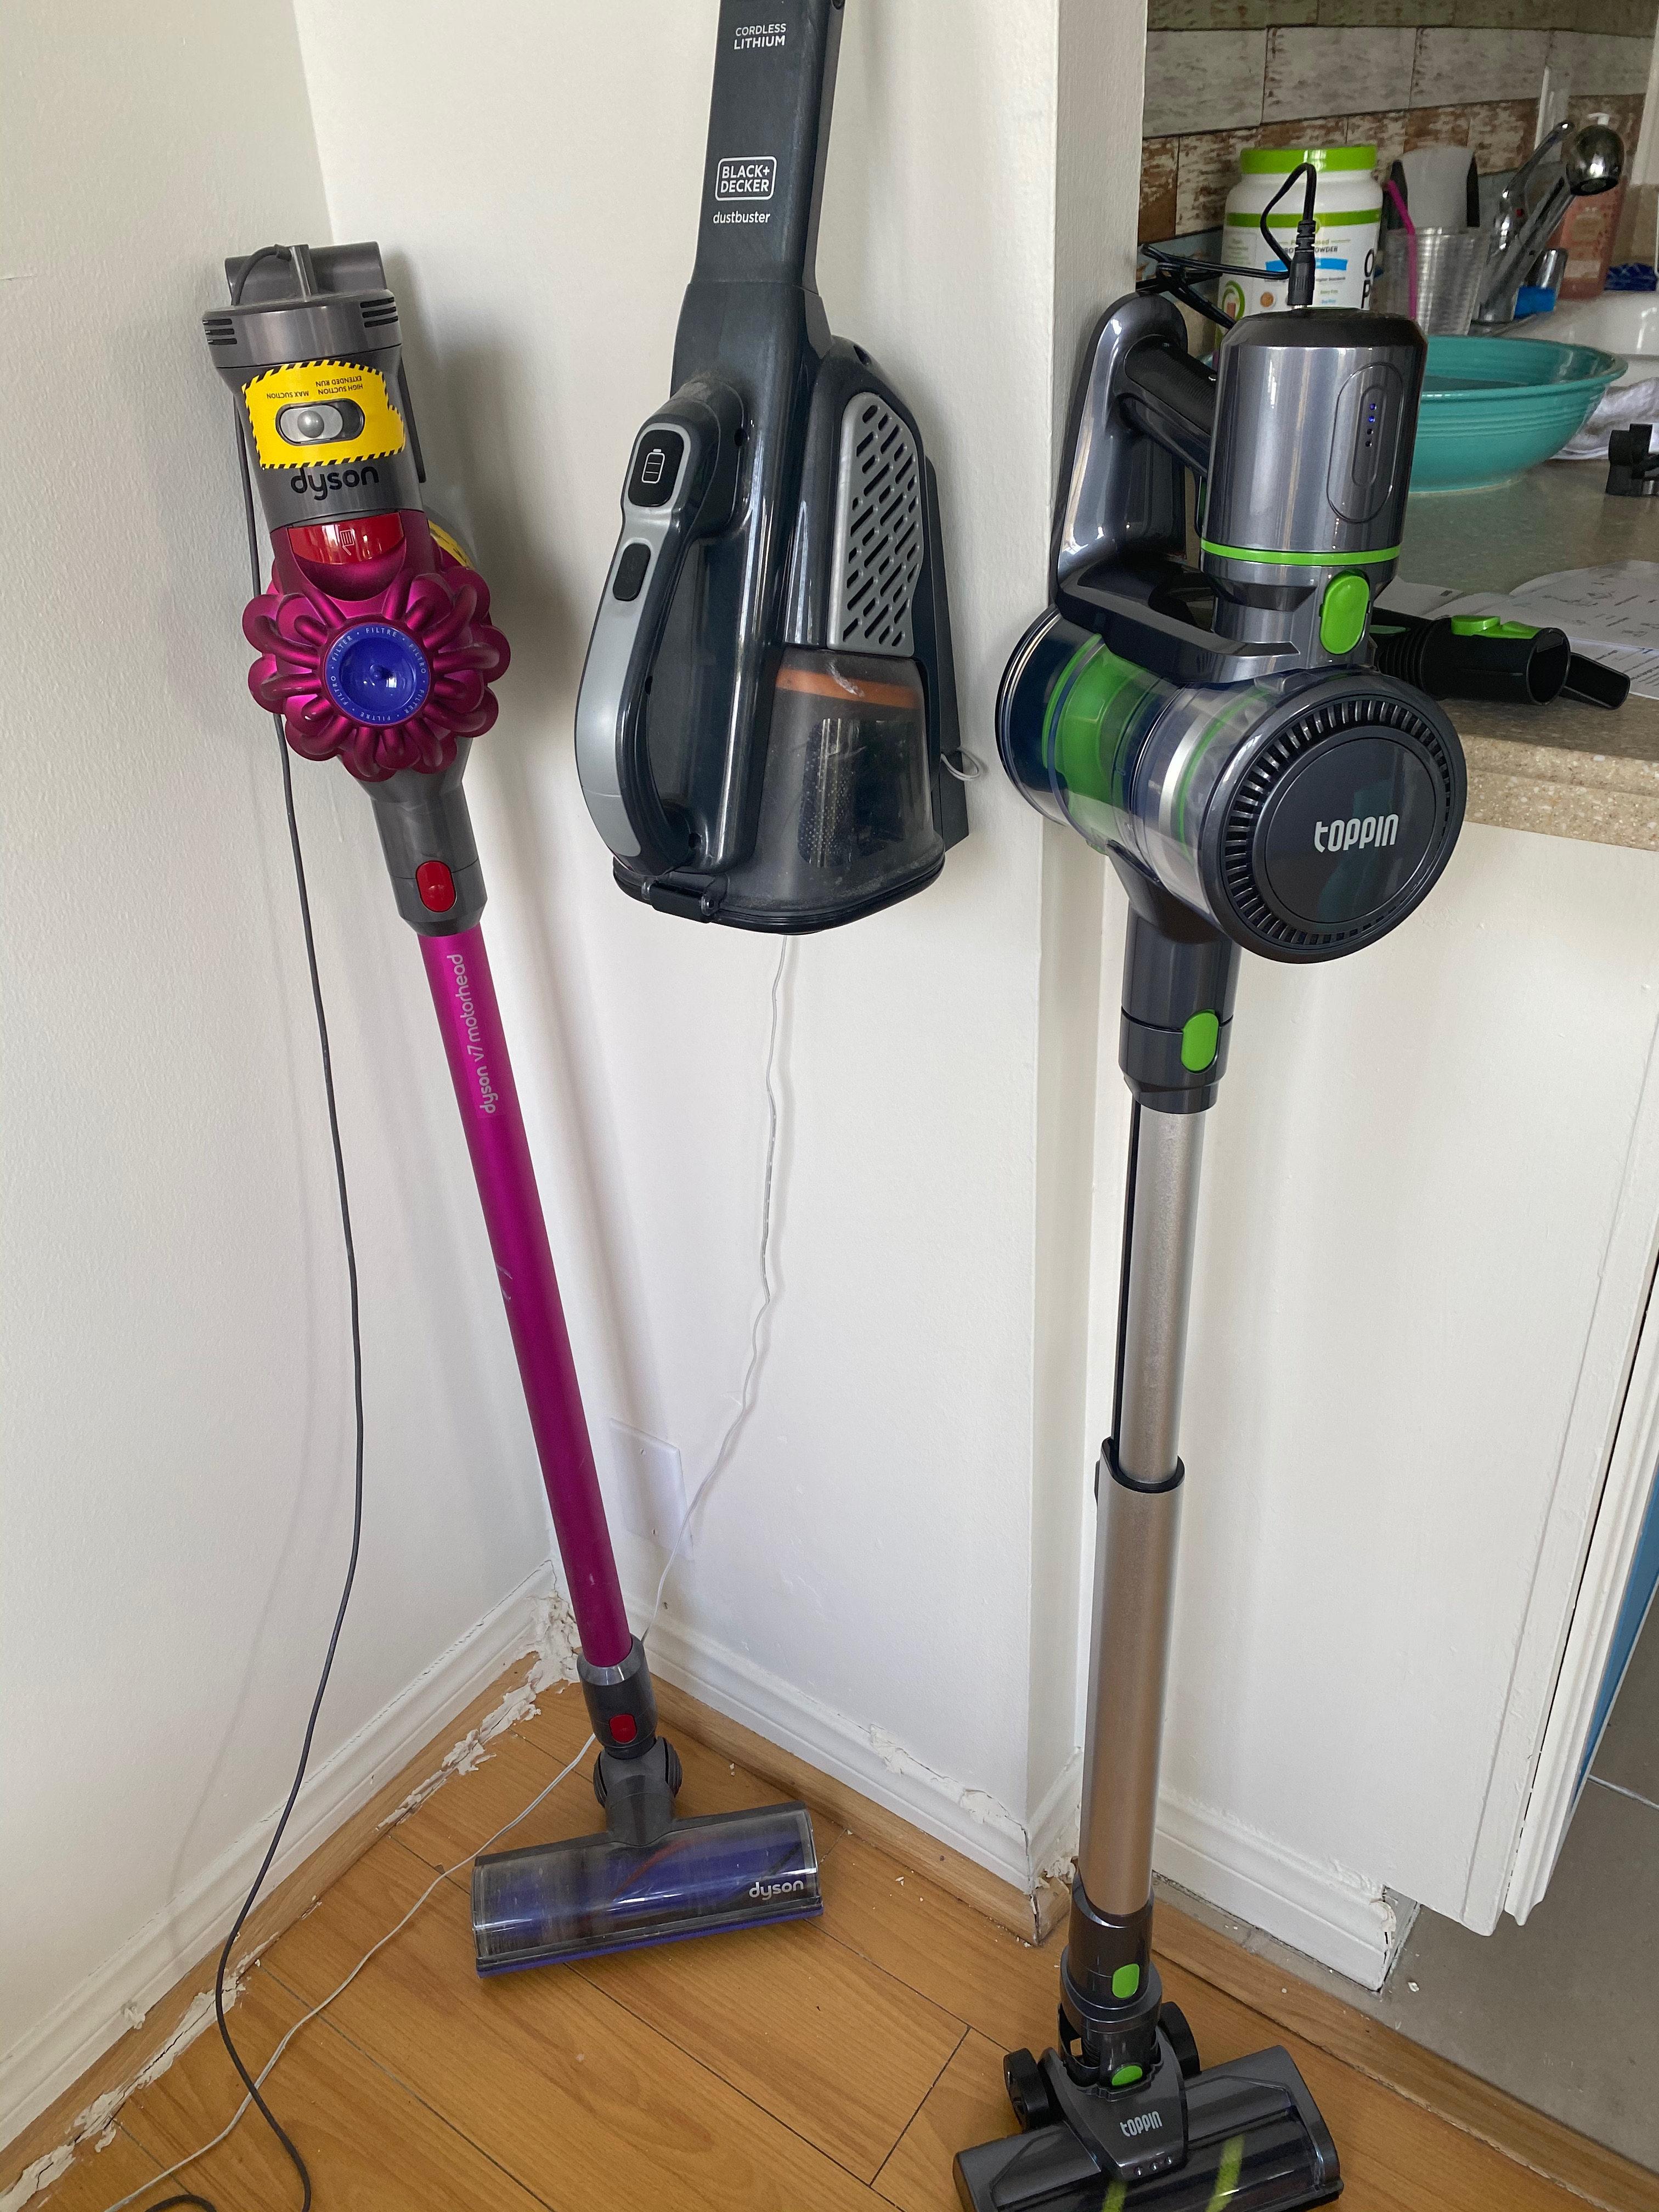 My Toppin cordless vacuum.